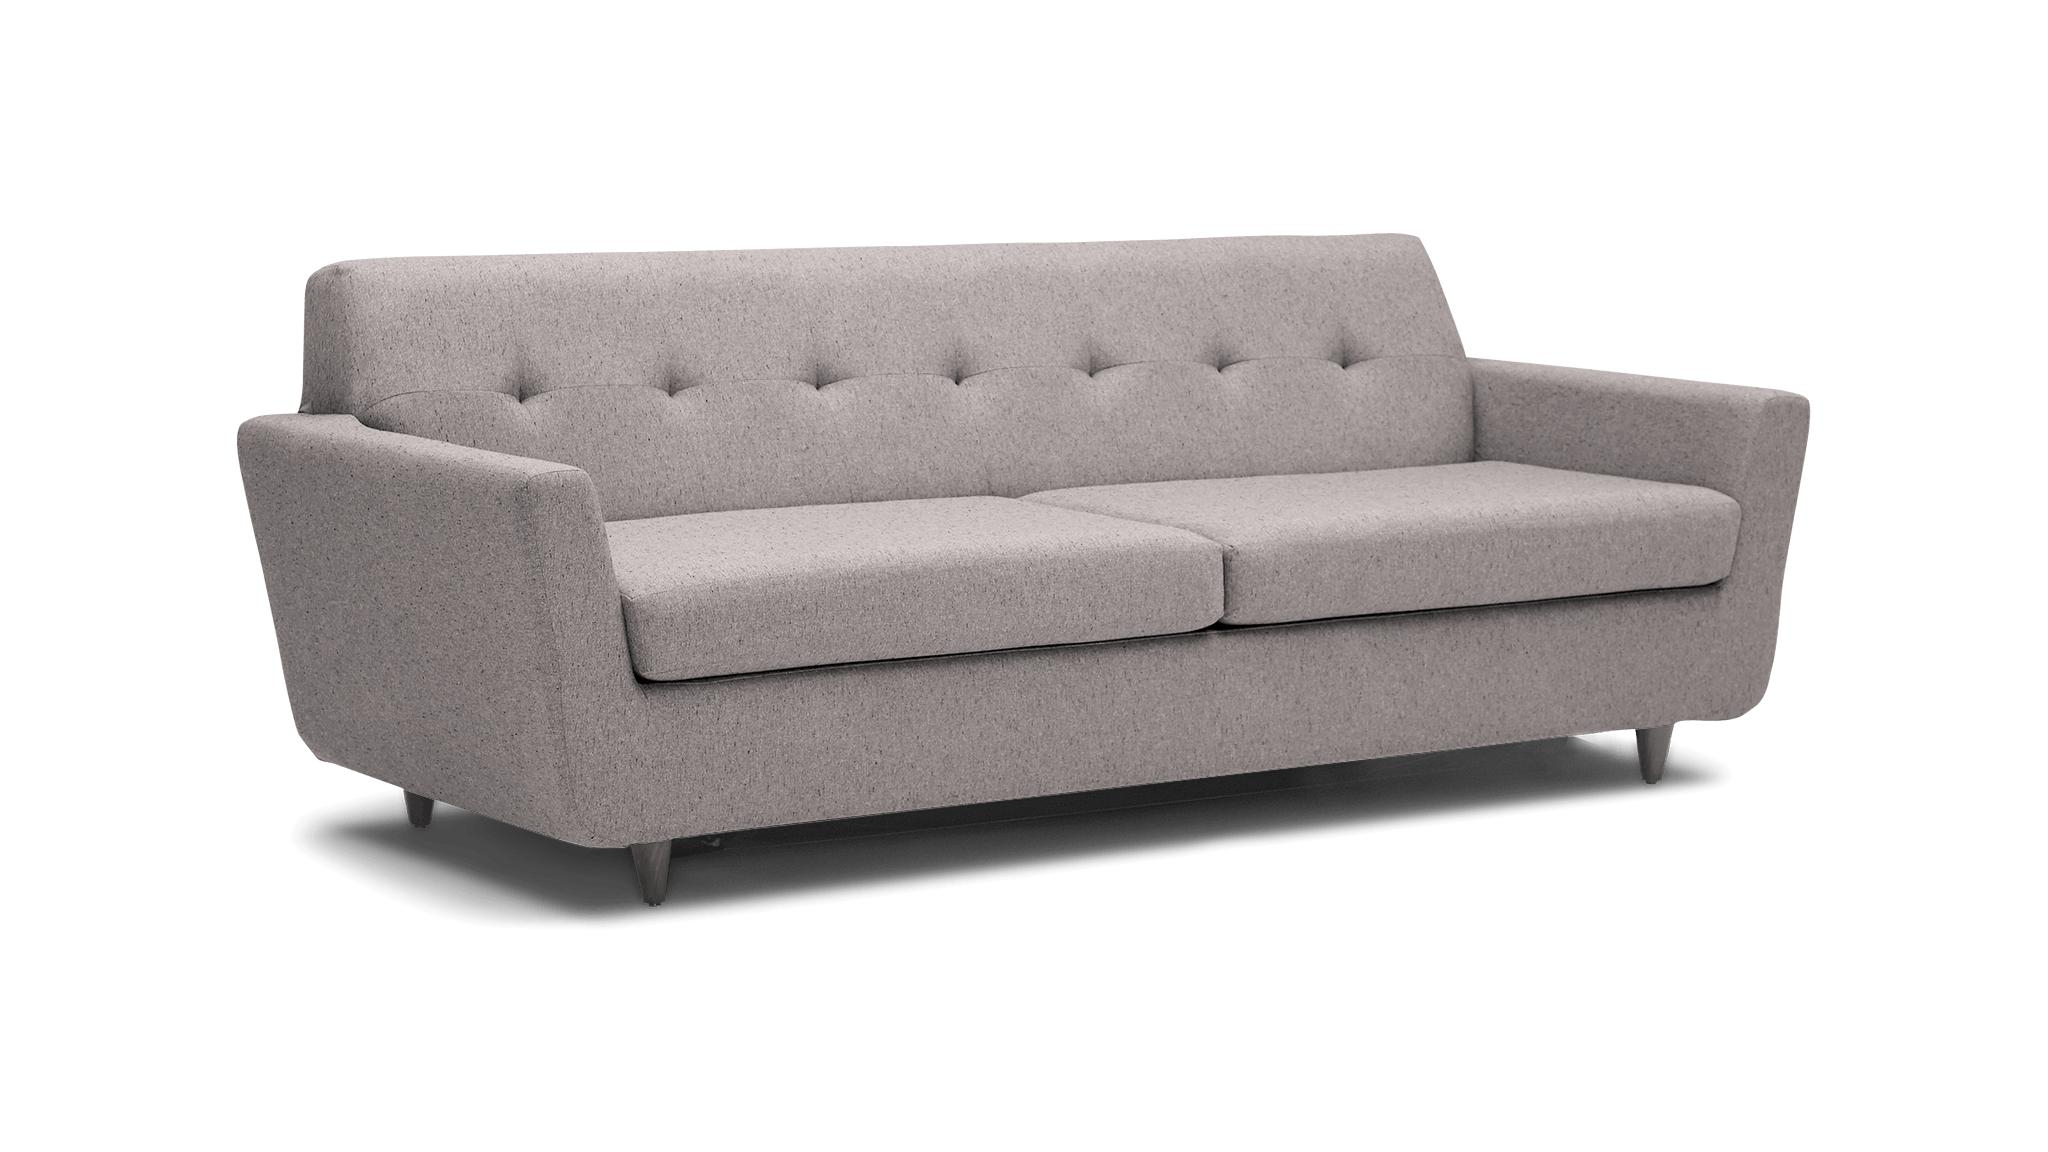 Gray Hughes Mid Century Modern Sleeper Sofa - Sunbrella Premier Wisteria - Mocha - Image 1